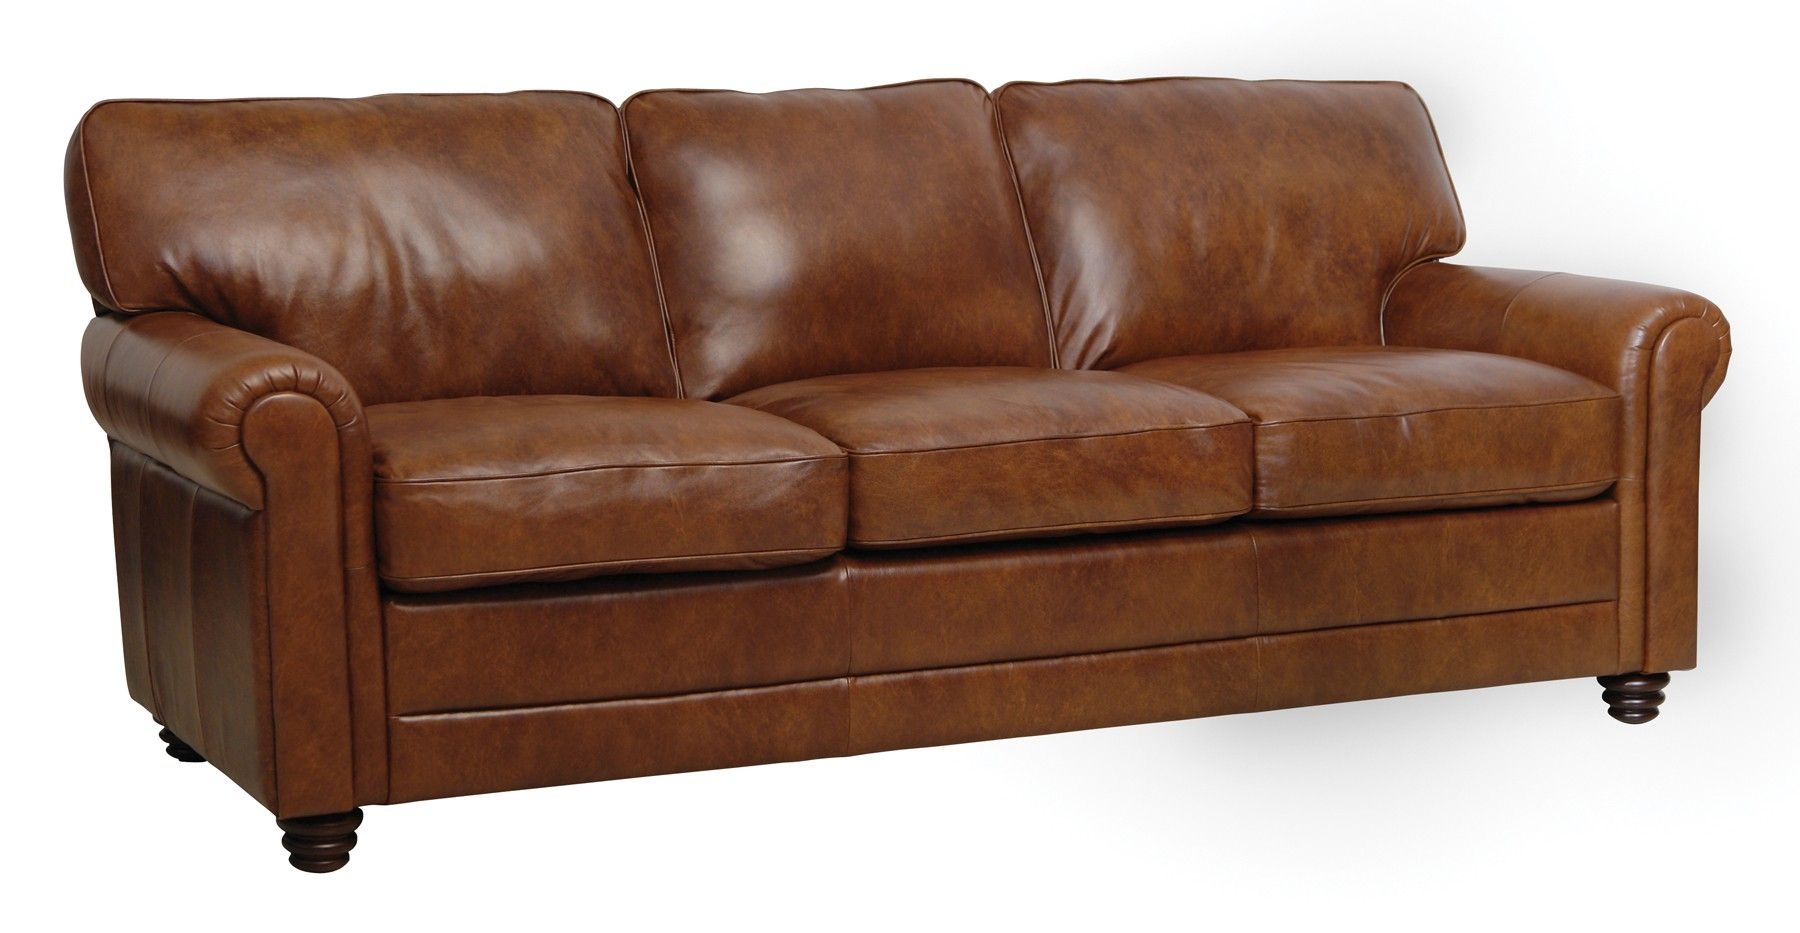 luke leather andrew sofa reviews